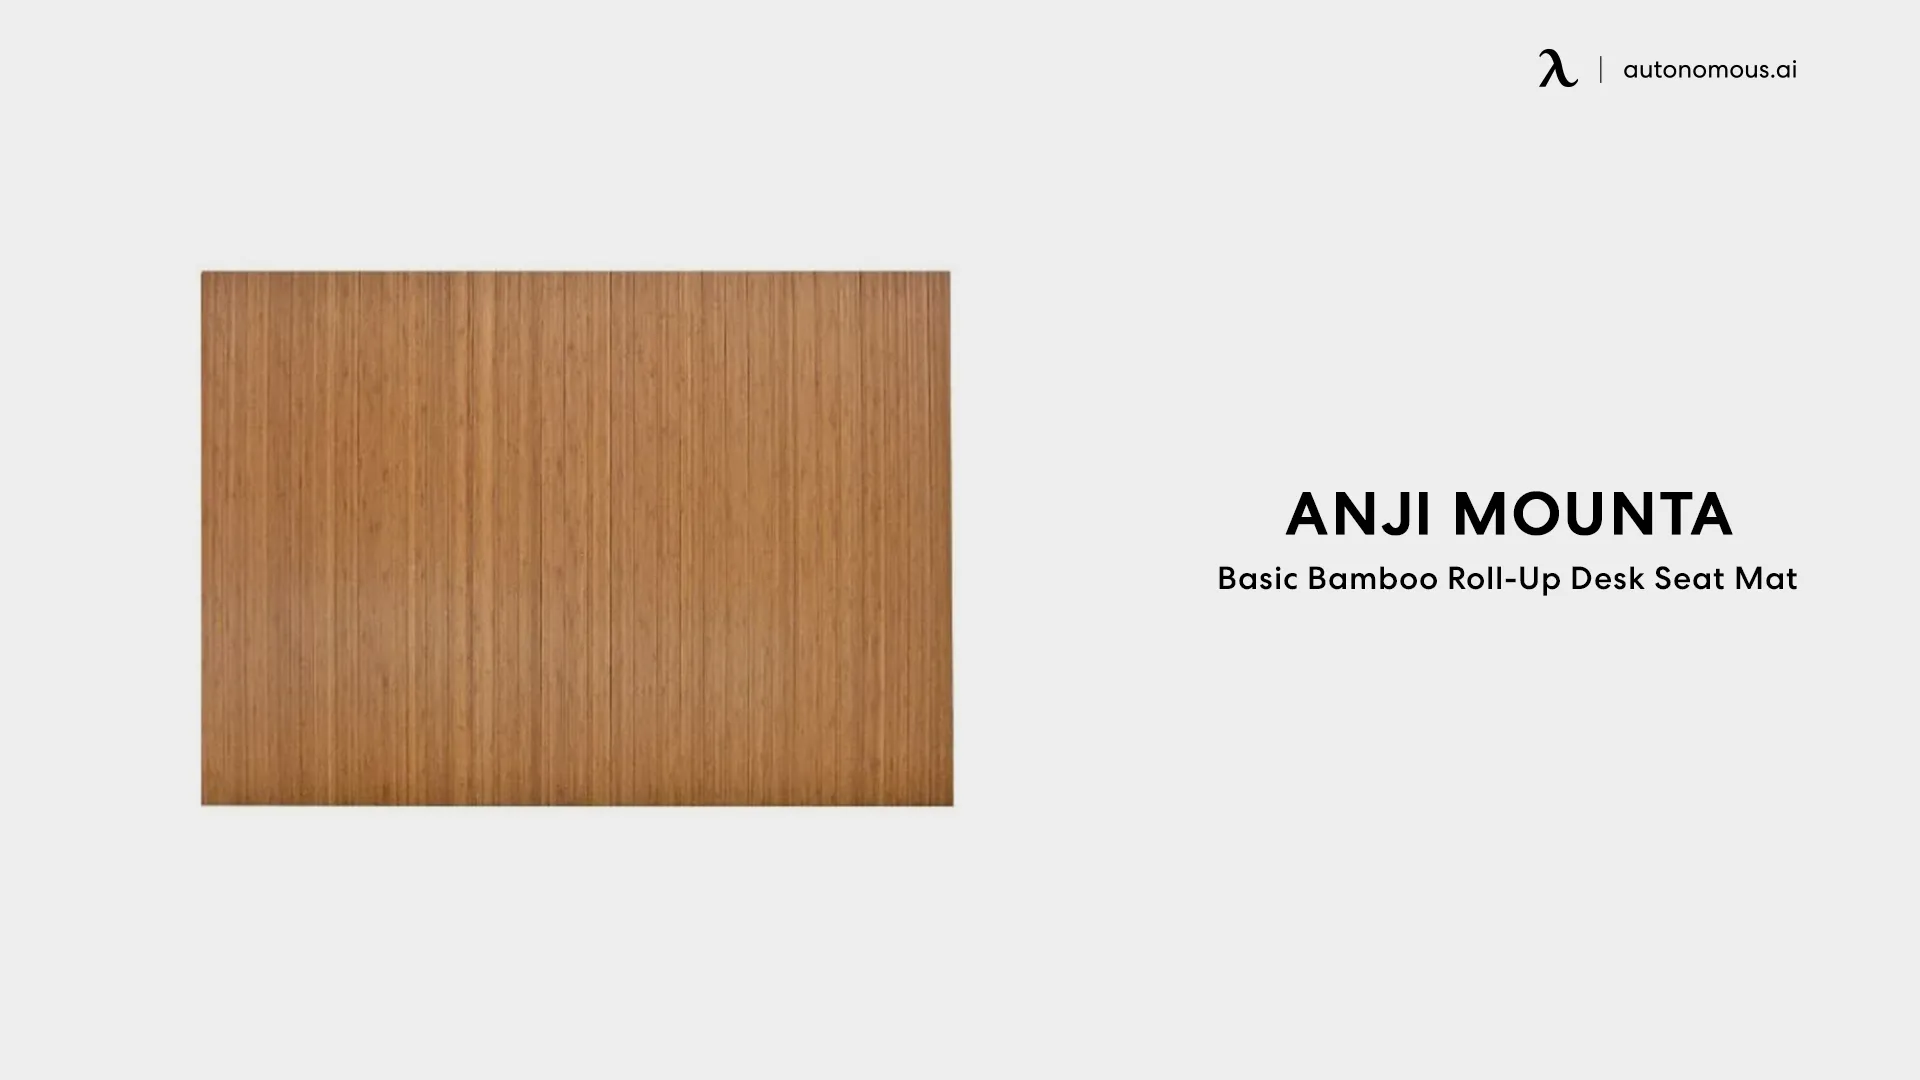 Basic Bamboo Roll-Up Desk Seat Mat from Anji Mountain